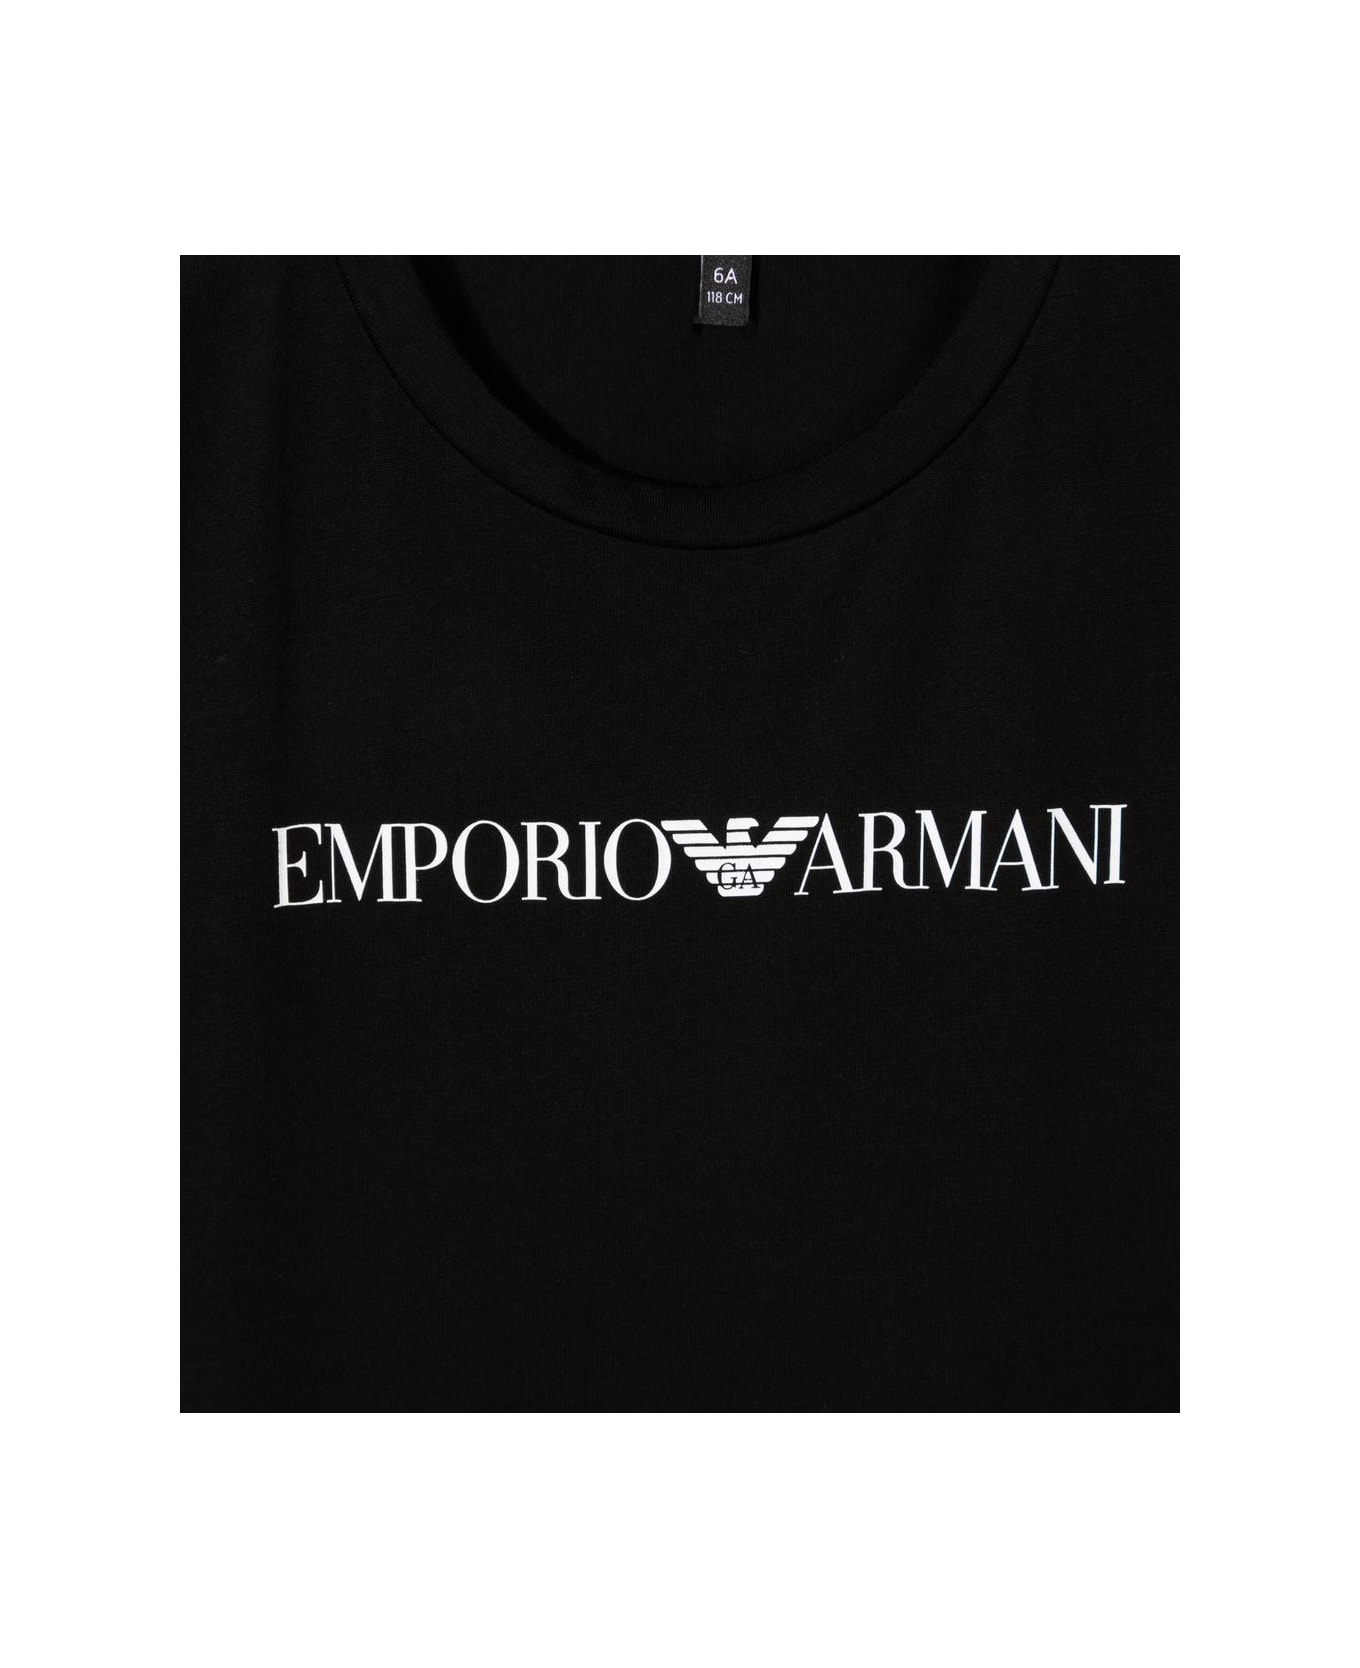 Emporio Armani T-shirt With Print - Nero Logo